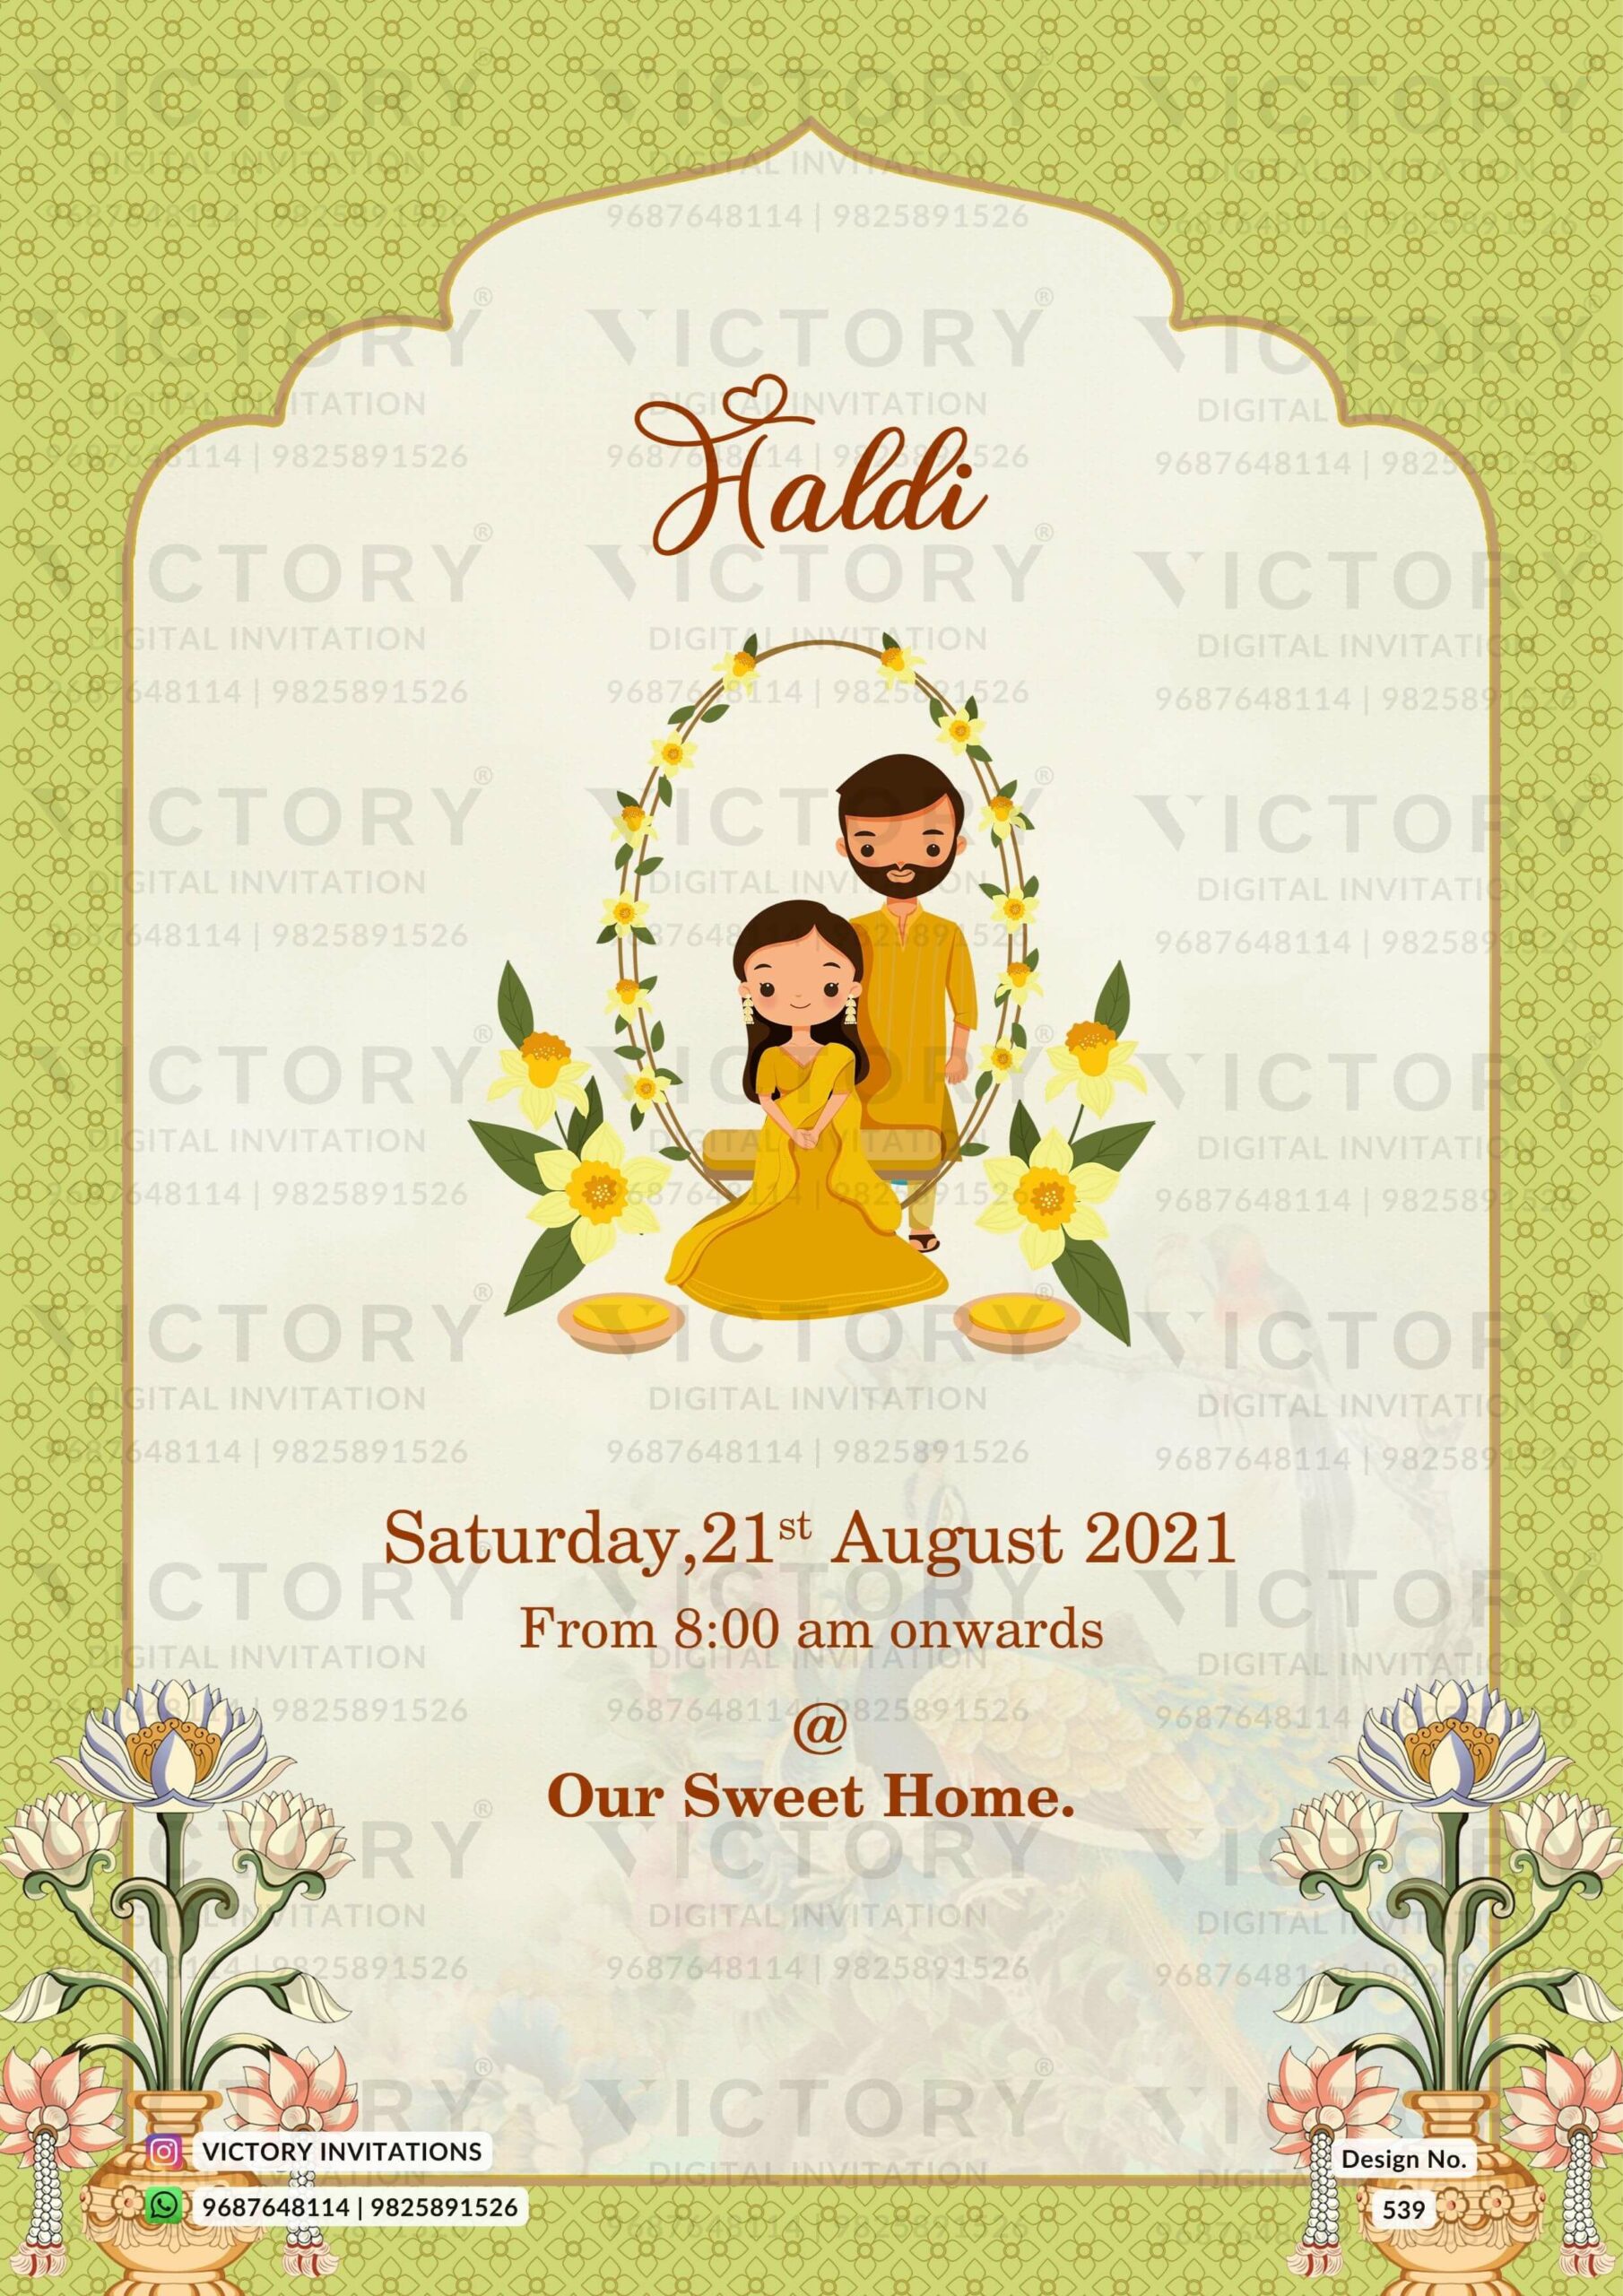 haldi ceremony digital invitation card design number 539